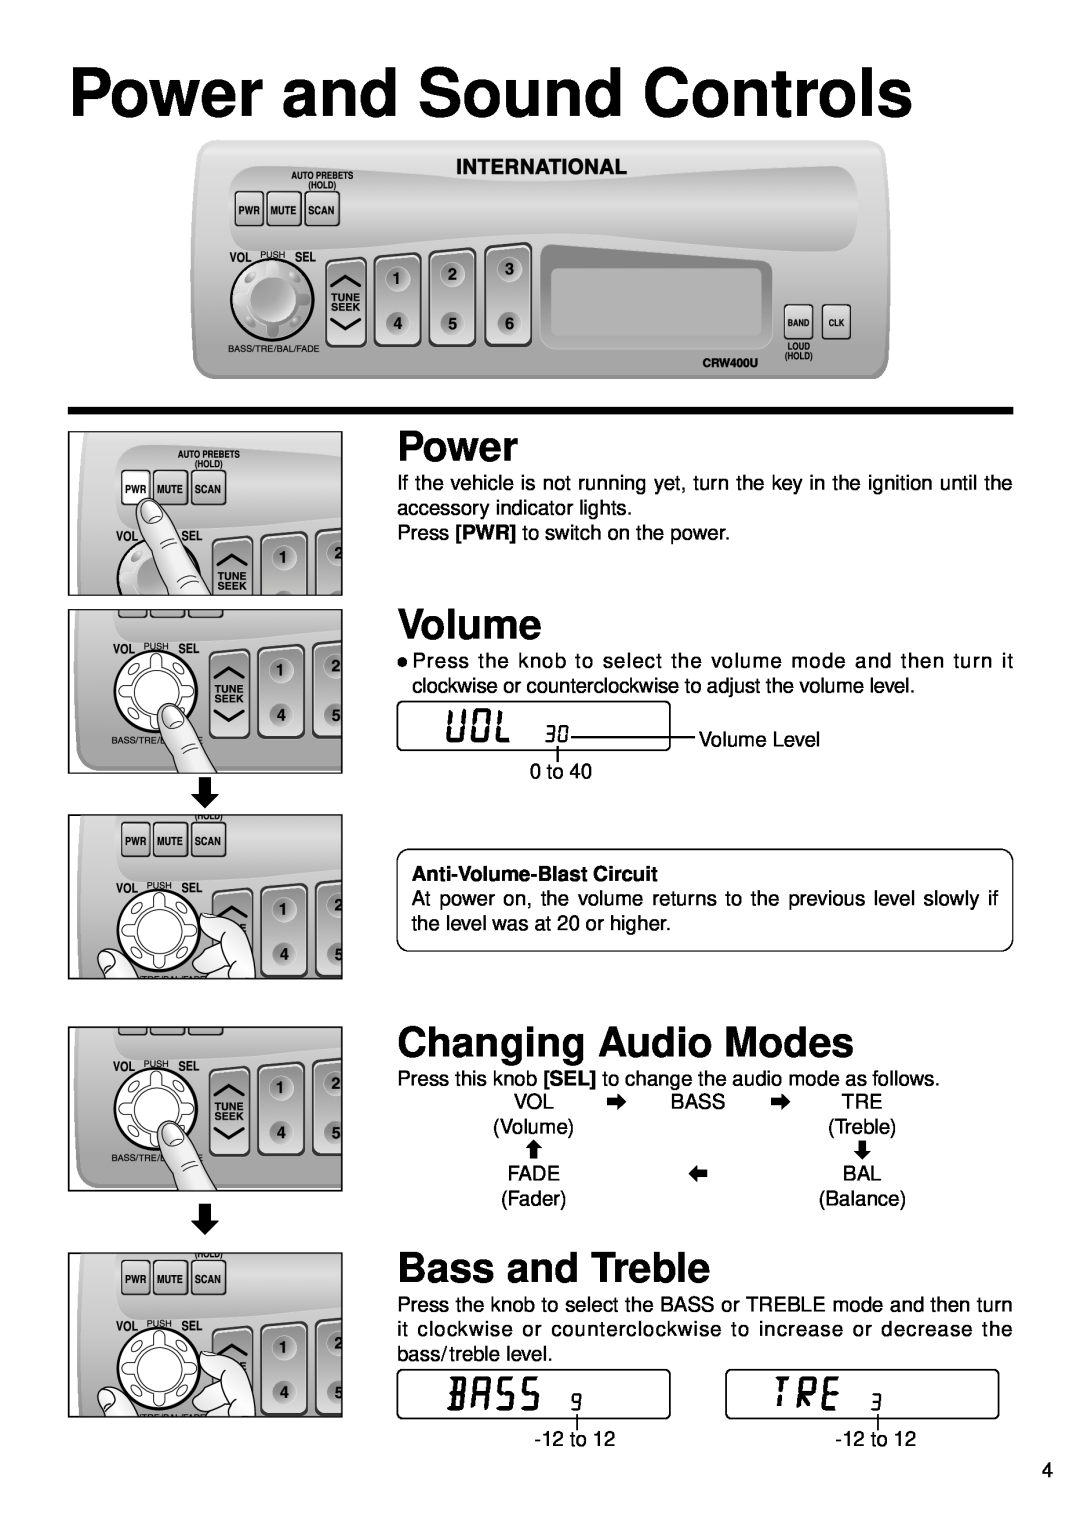 Panasonic CR-W400U Power and Sound Controls, Changing Audio Modes, Bass and Treble, Anti-Volume-BlastCircuit 